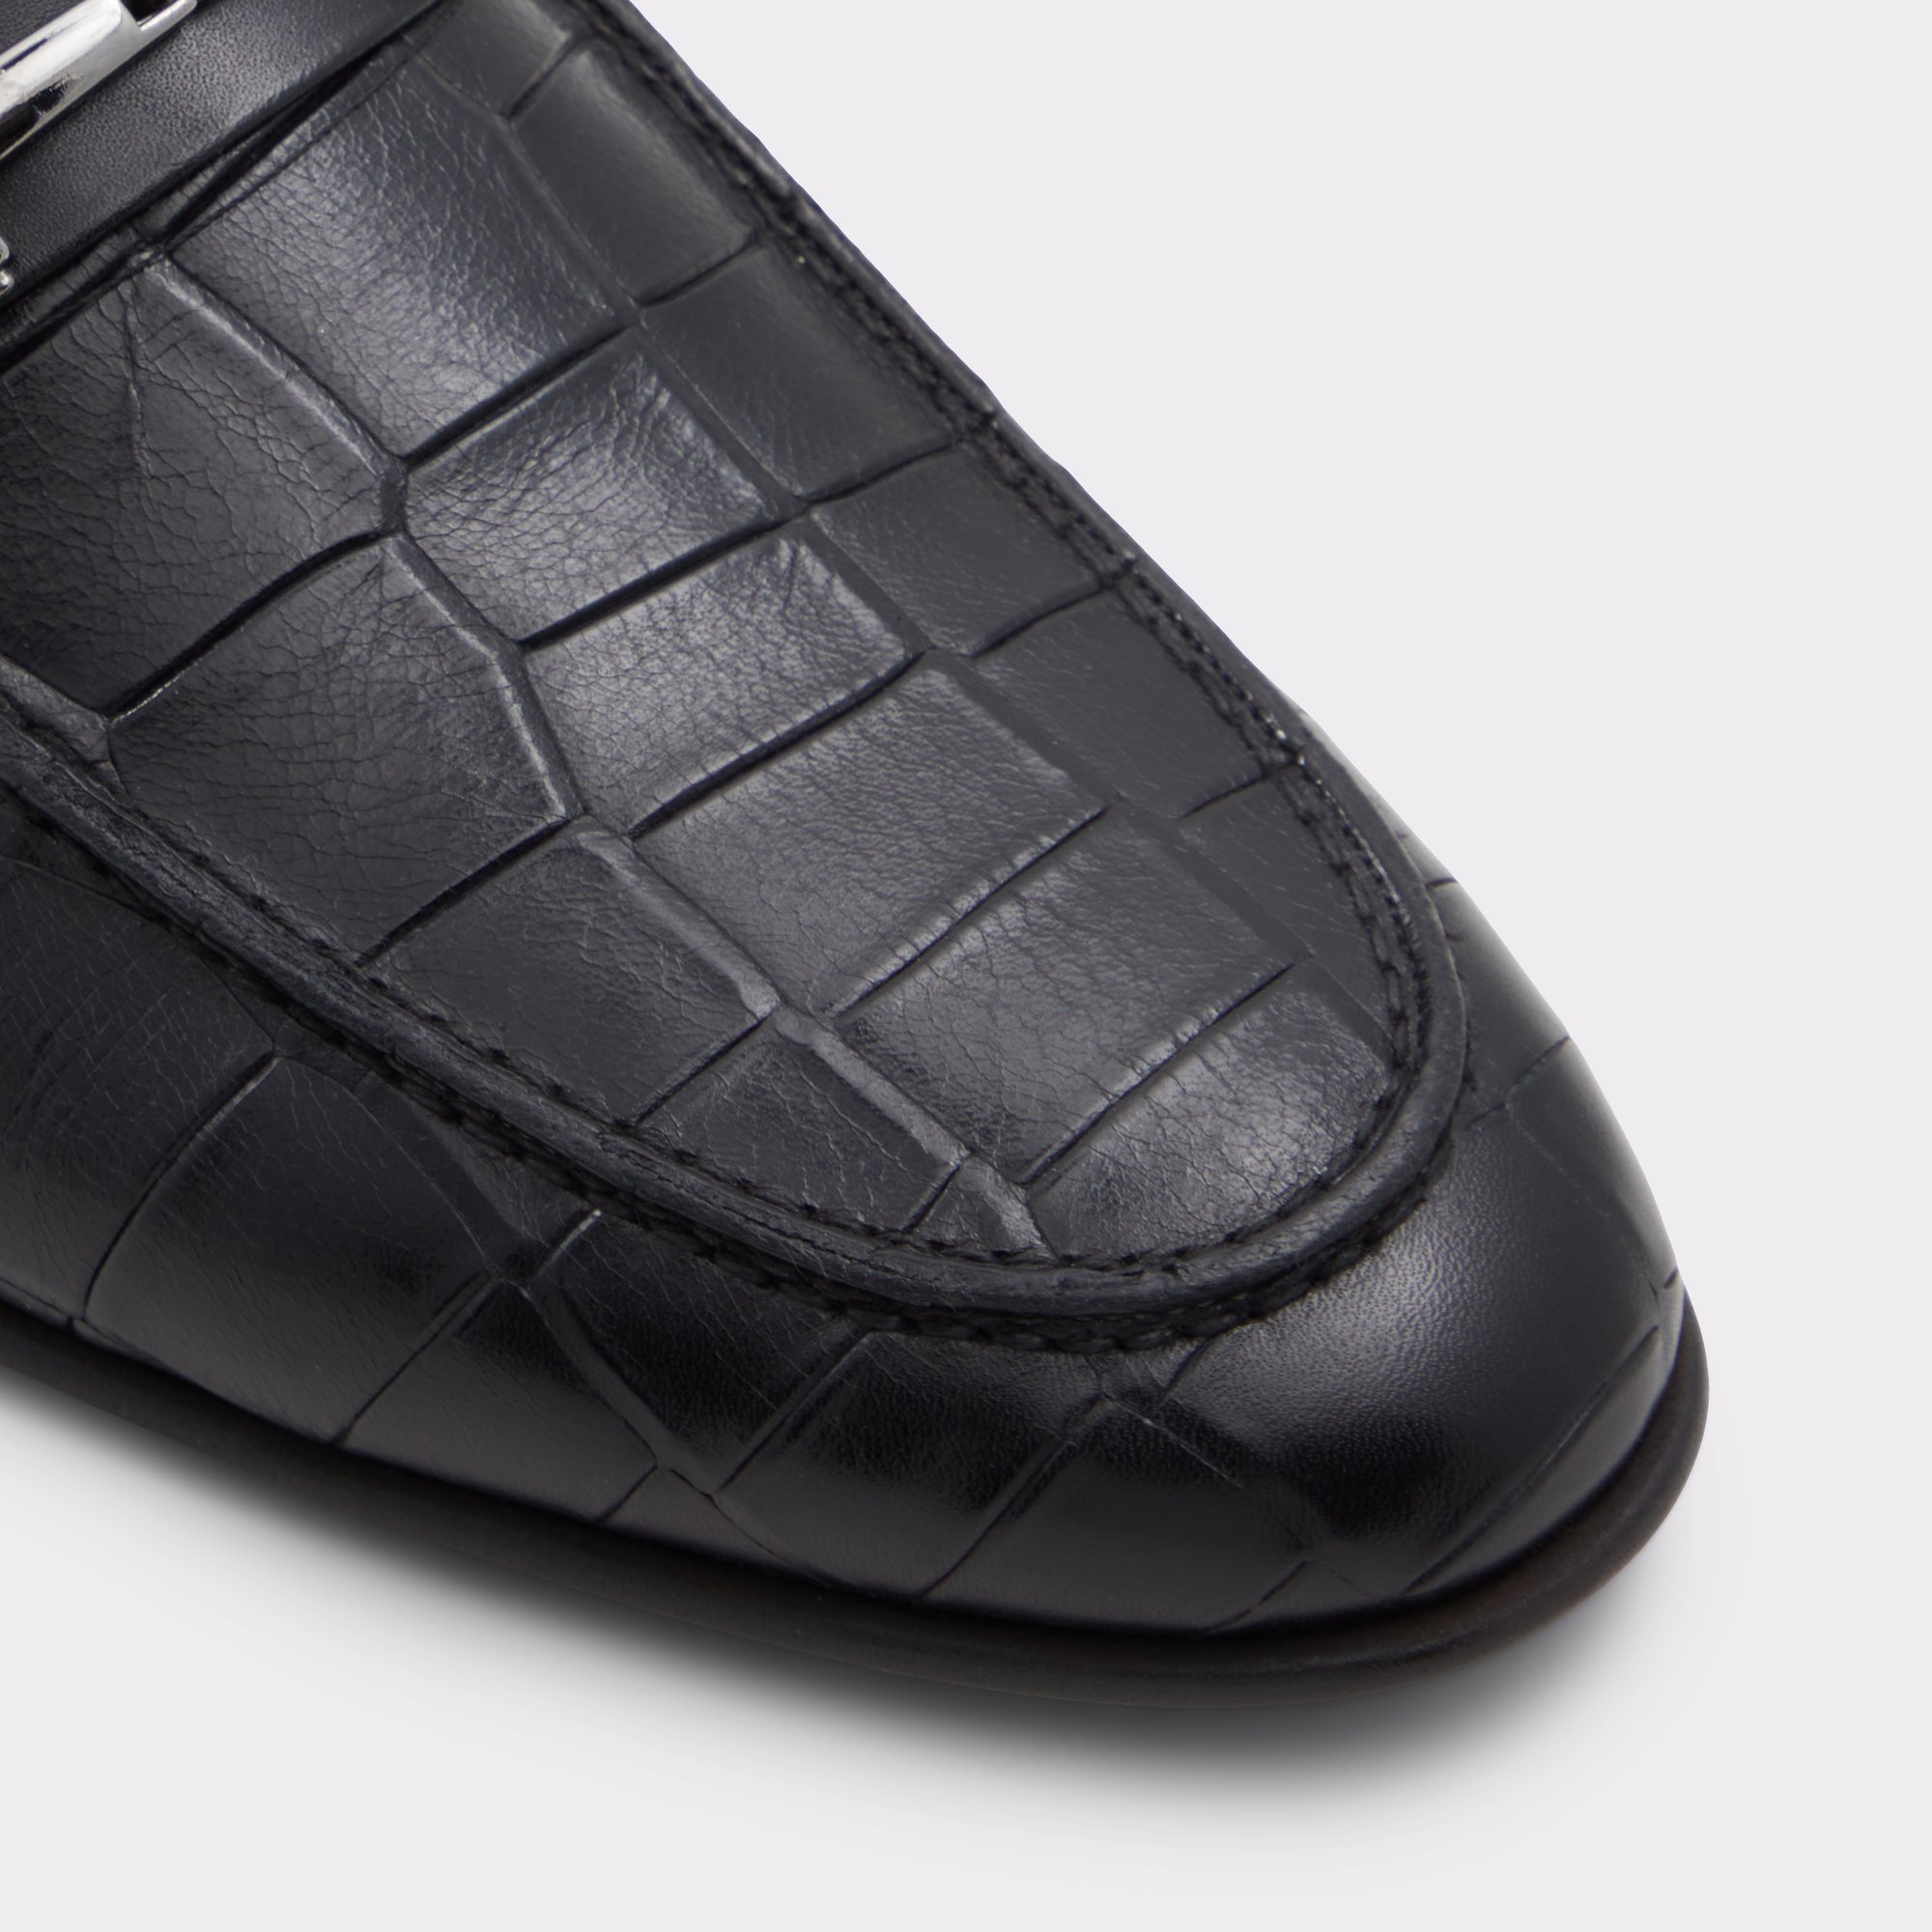 Esco Black Men's Loafers & Slip-Ons | ALDO Canada